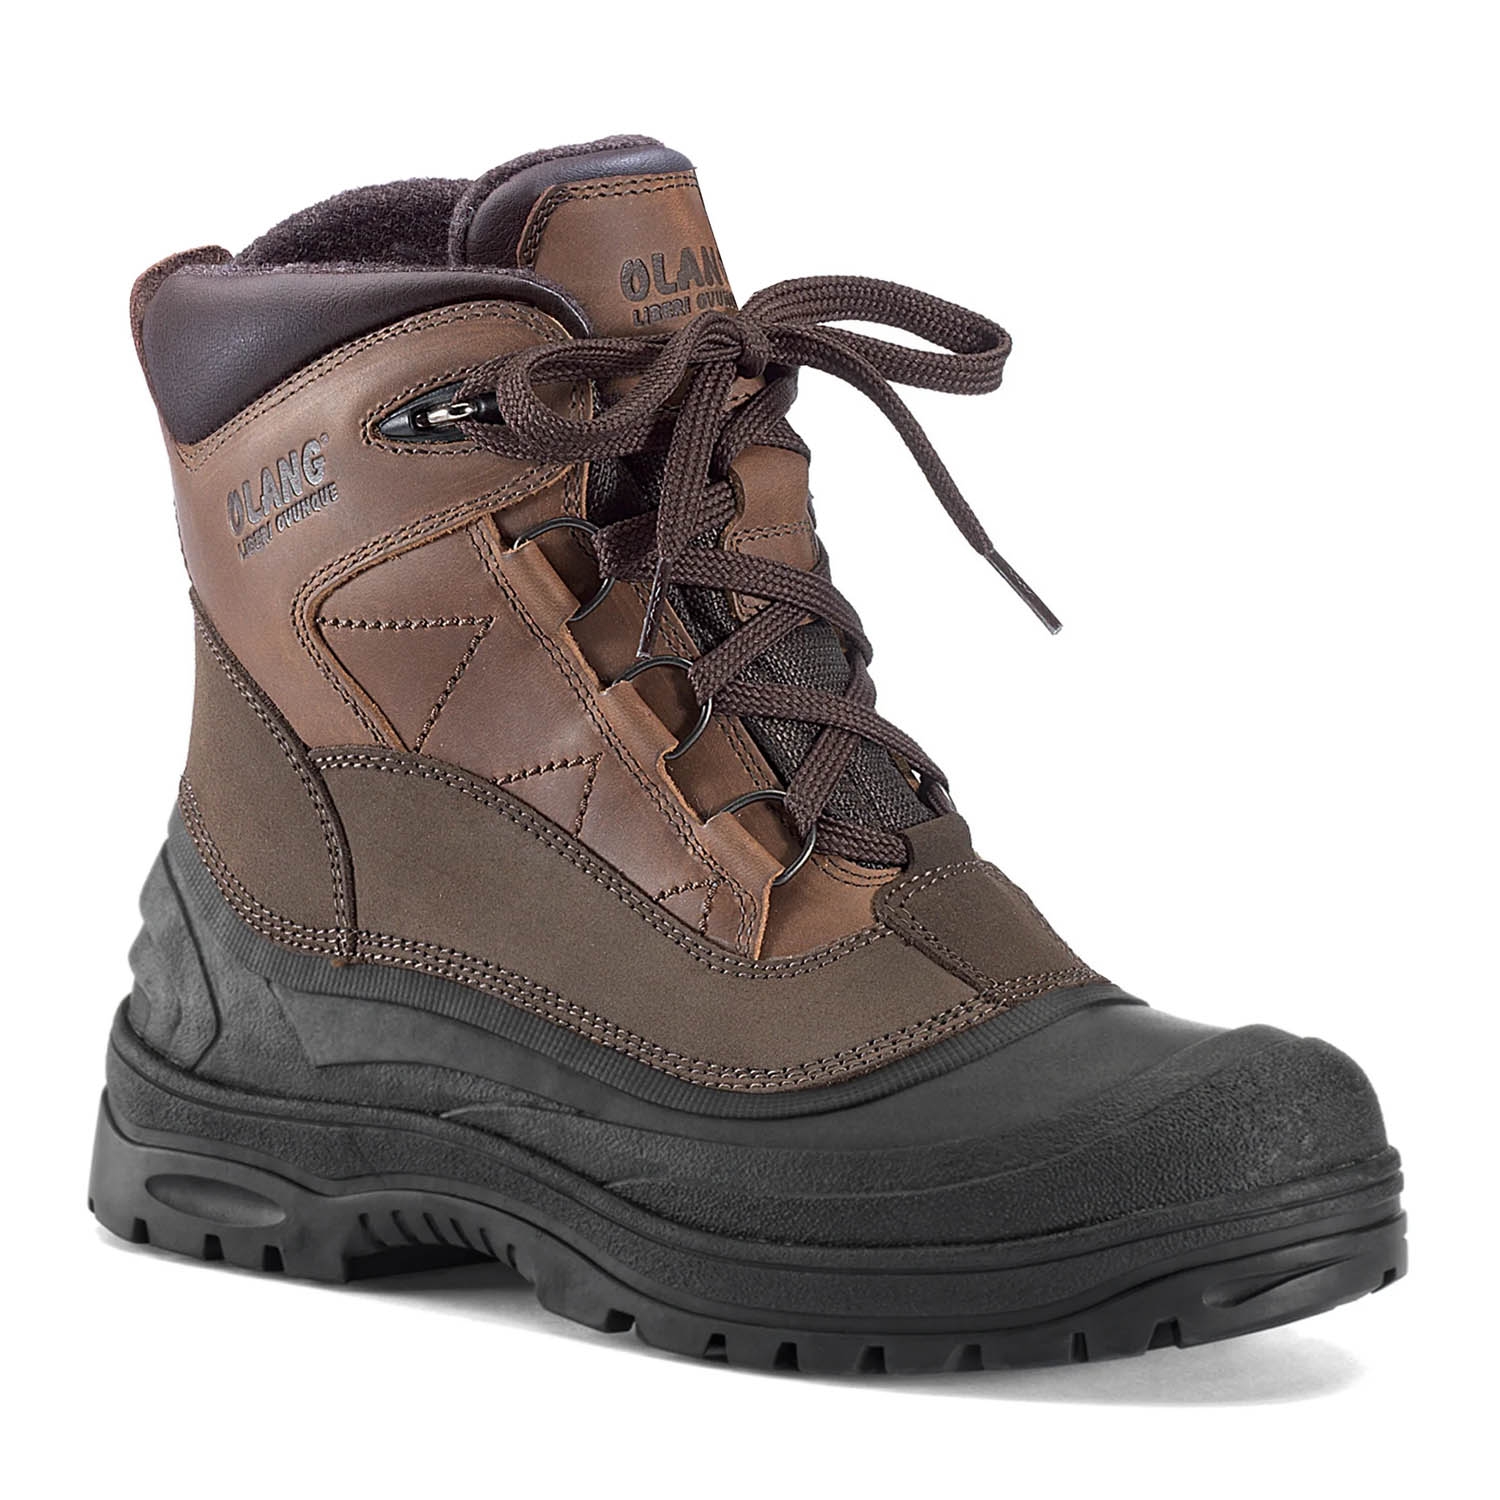 Snow Boots | Winter Footwear | Winter Boots - Snowtrax